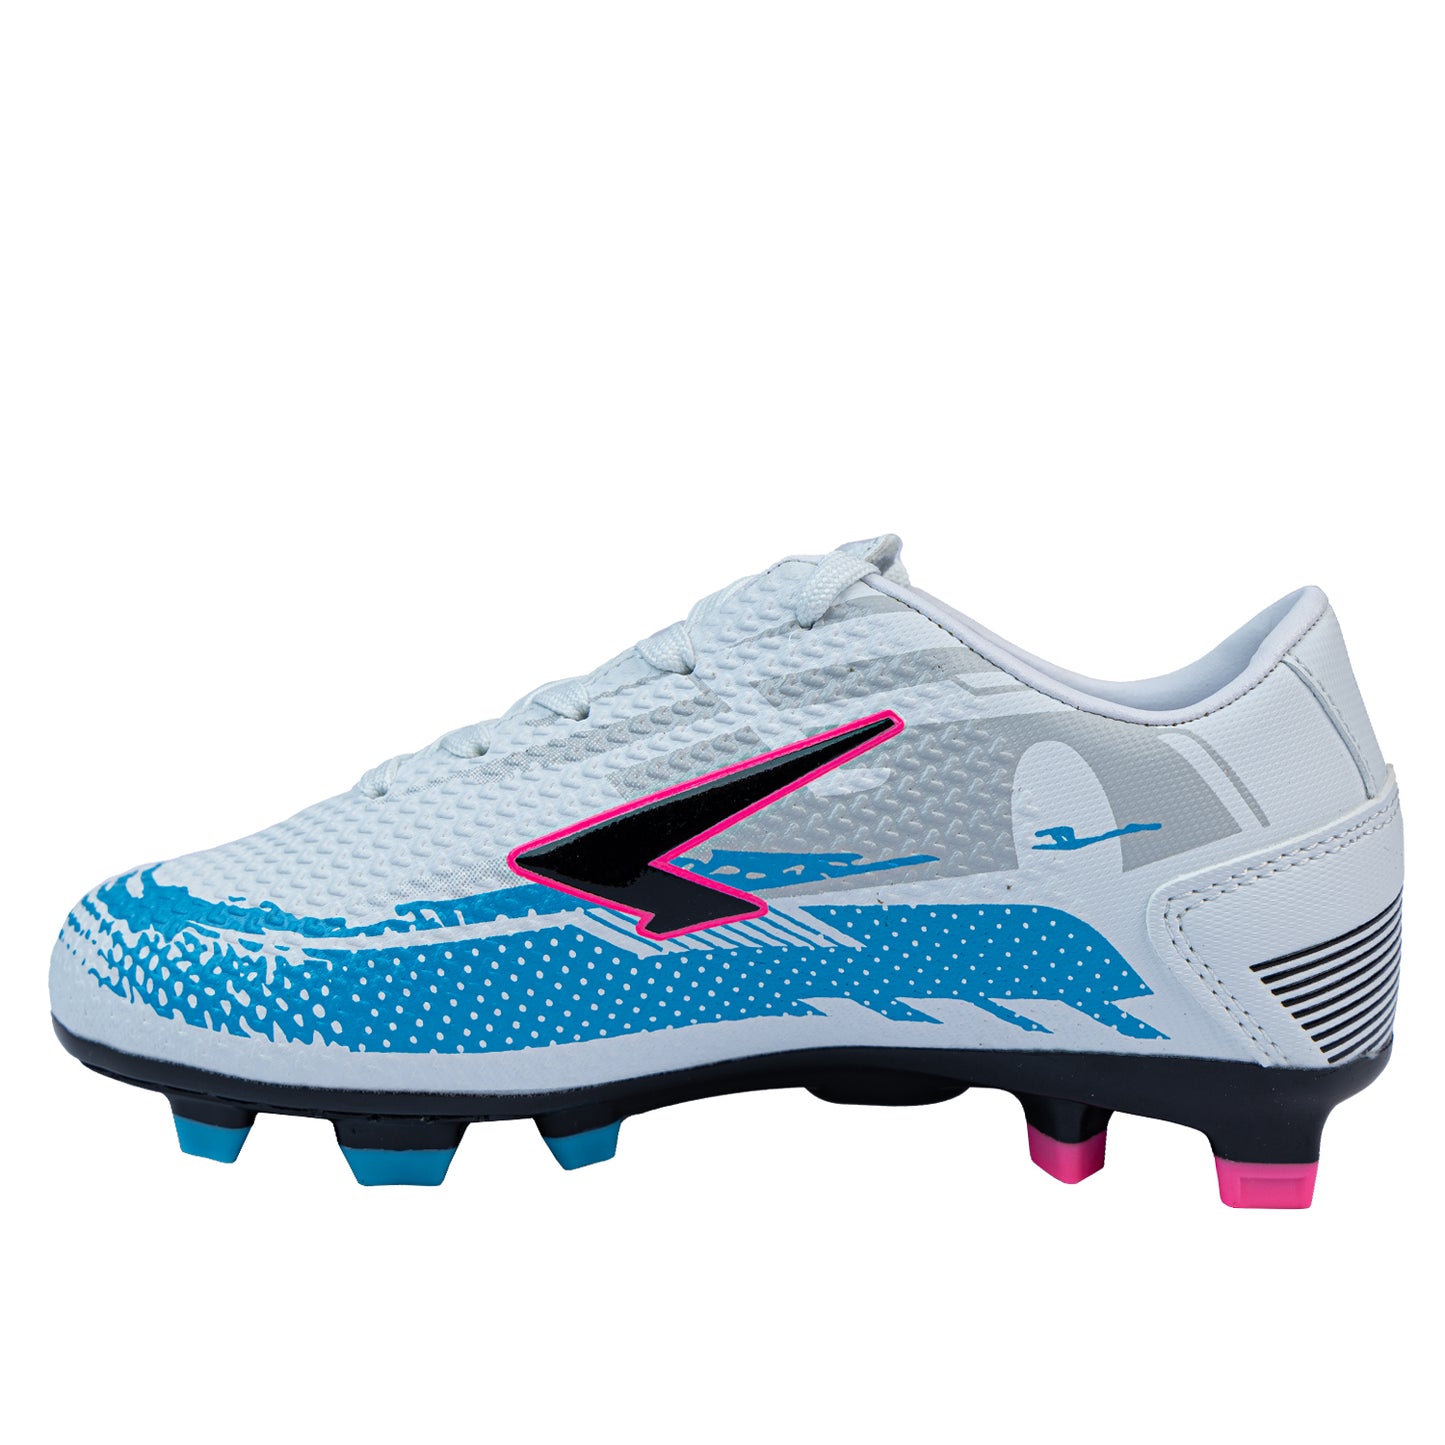 Knight XTR Junior Football Boots - White/Sky/Pink